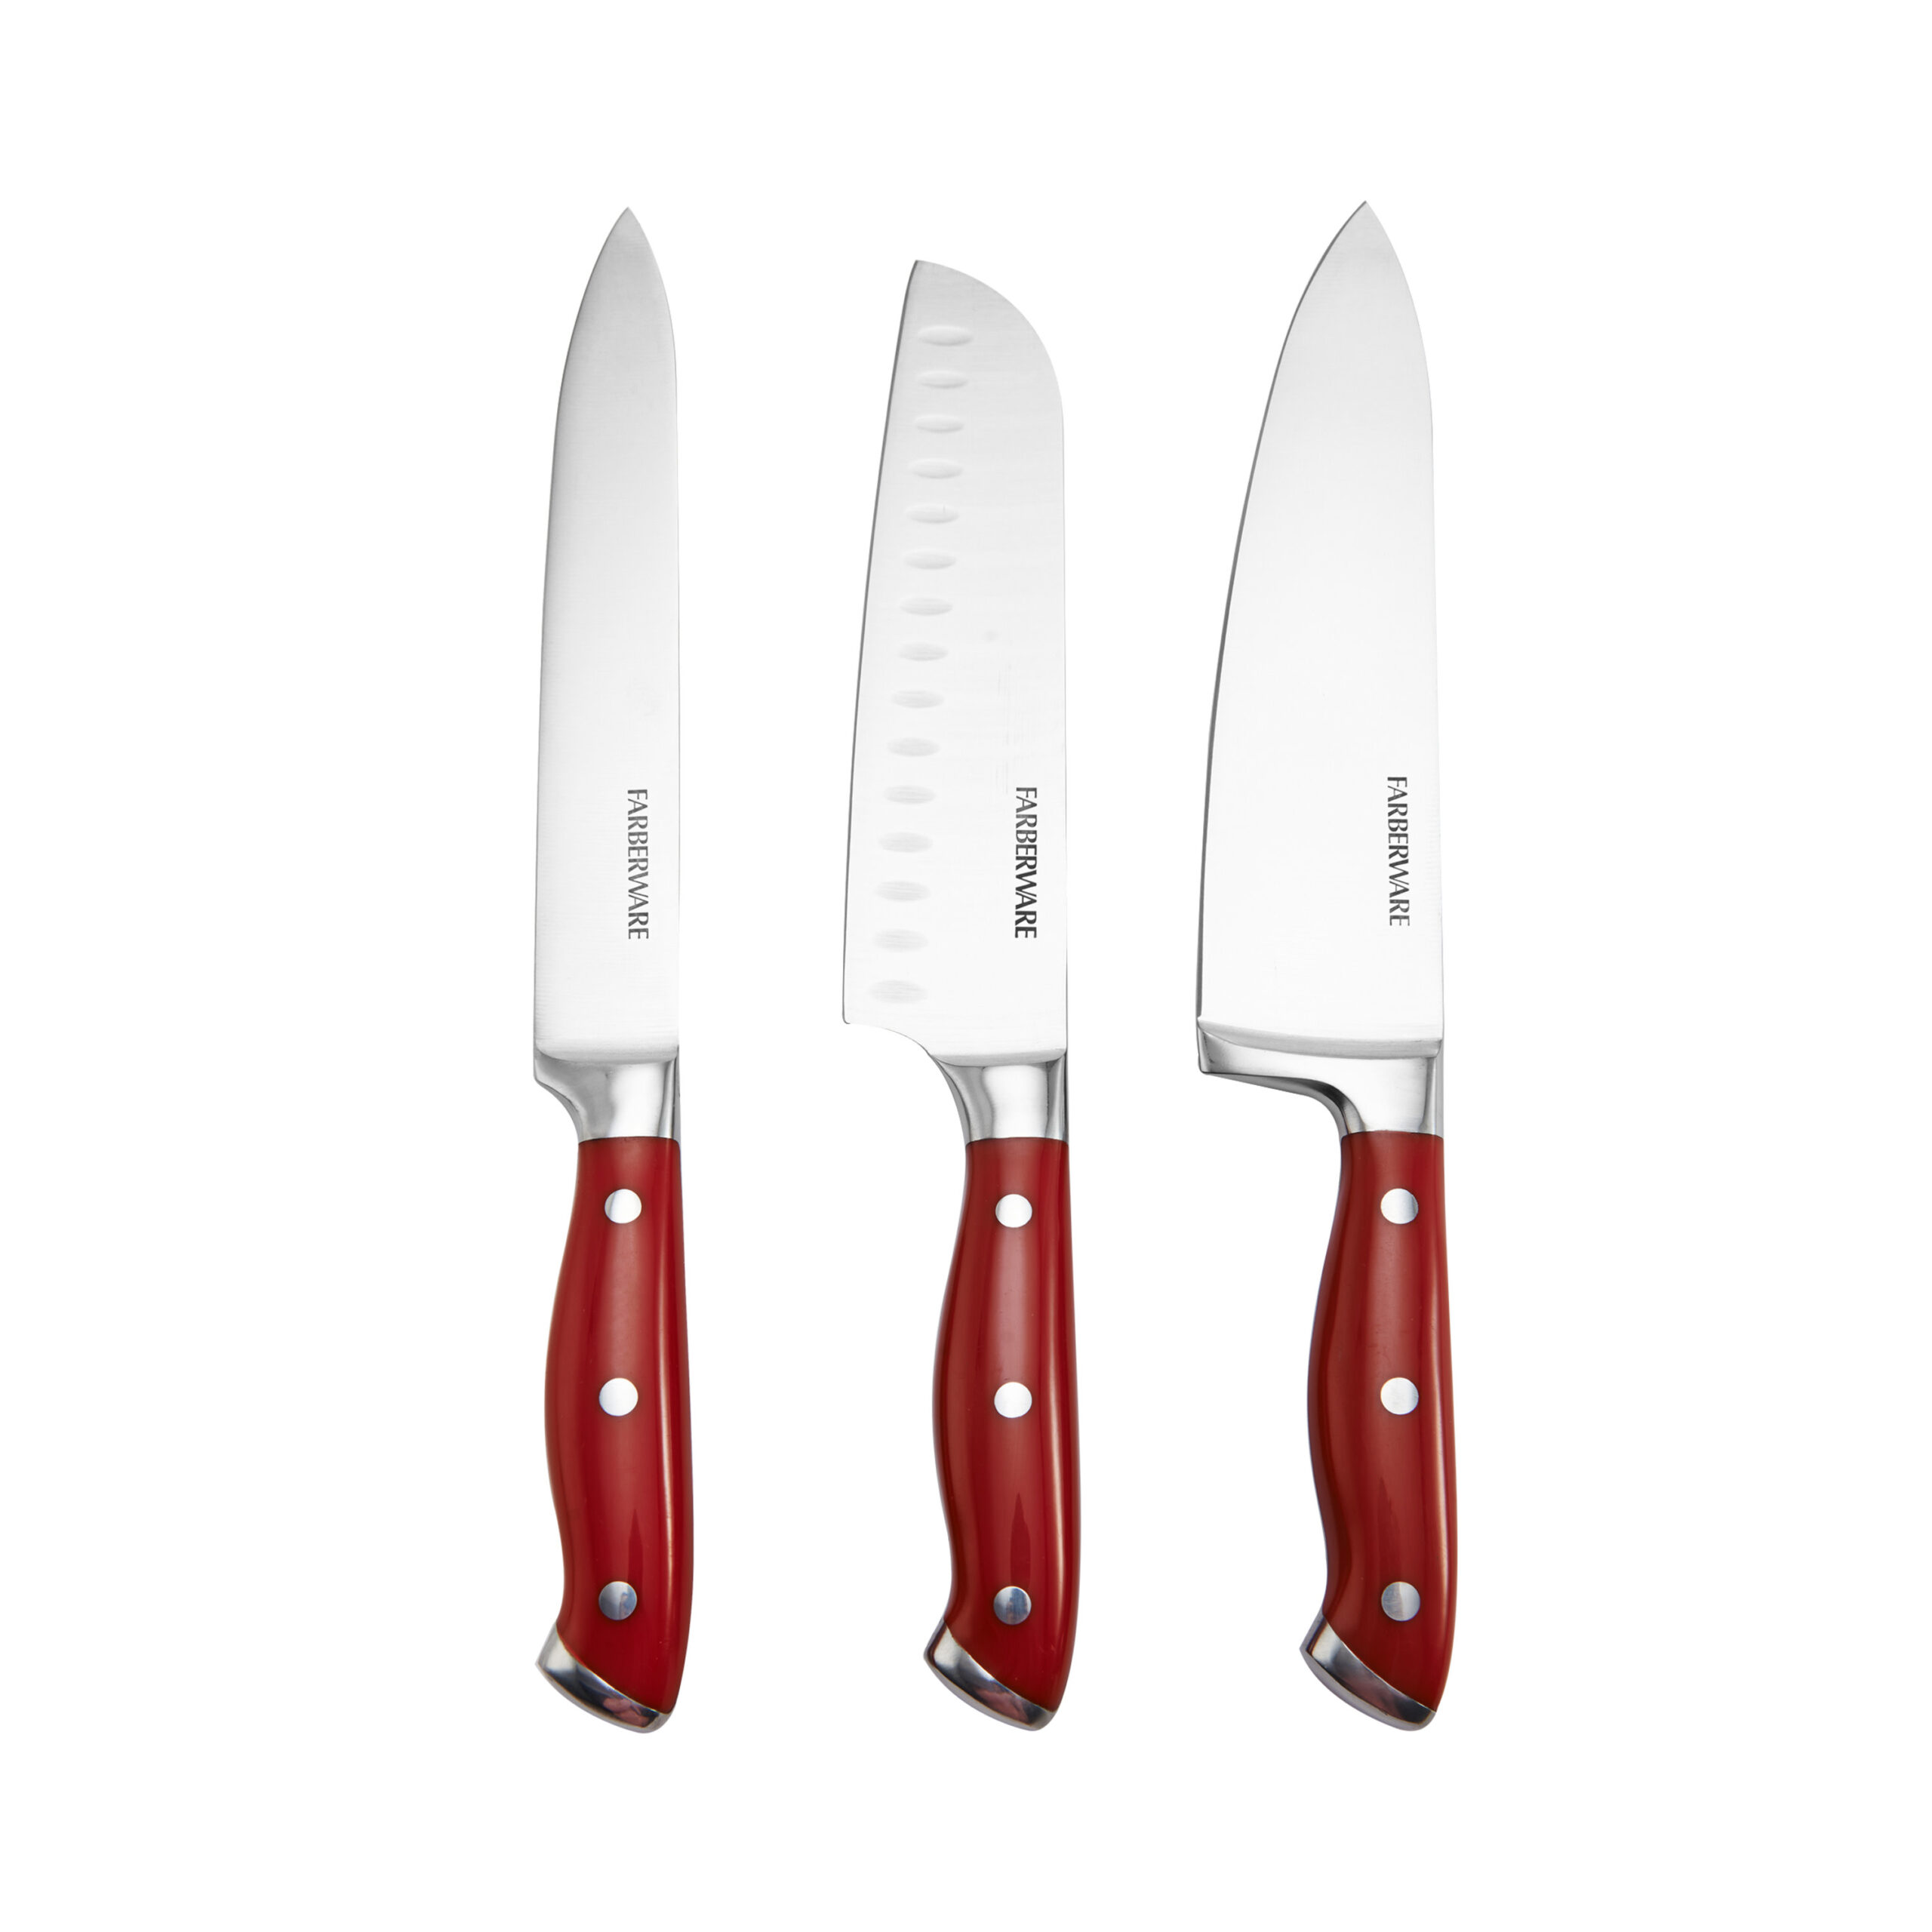 Farberware Edgekeeper 15-piece Stainless Steel Basic Red Knife